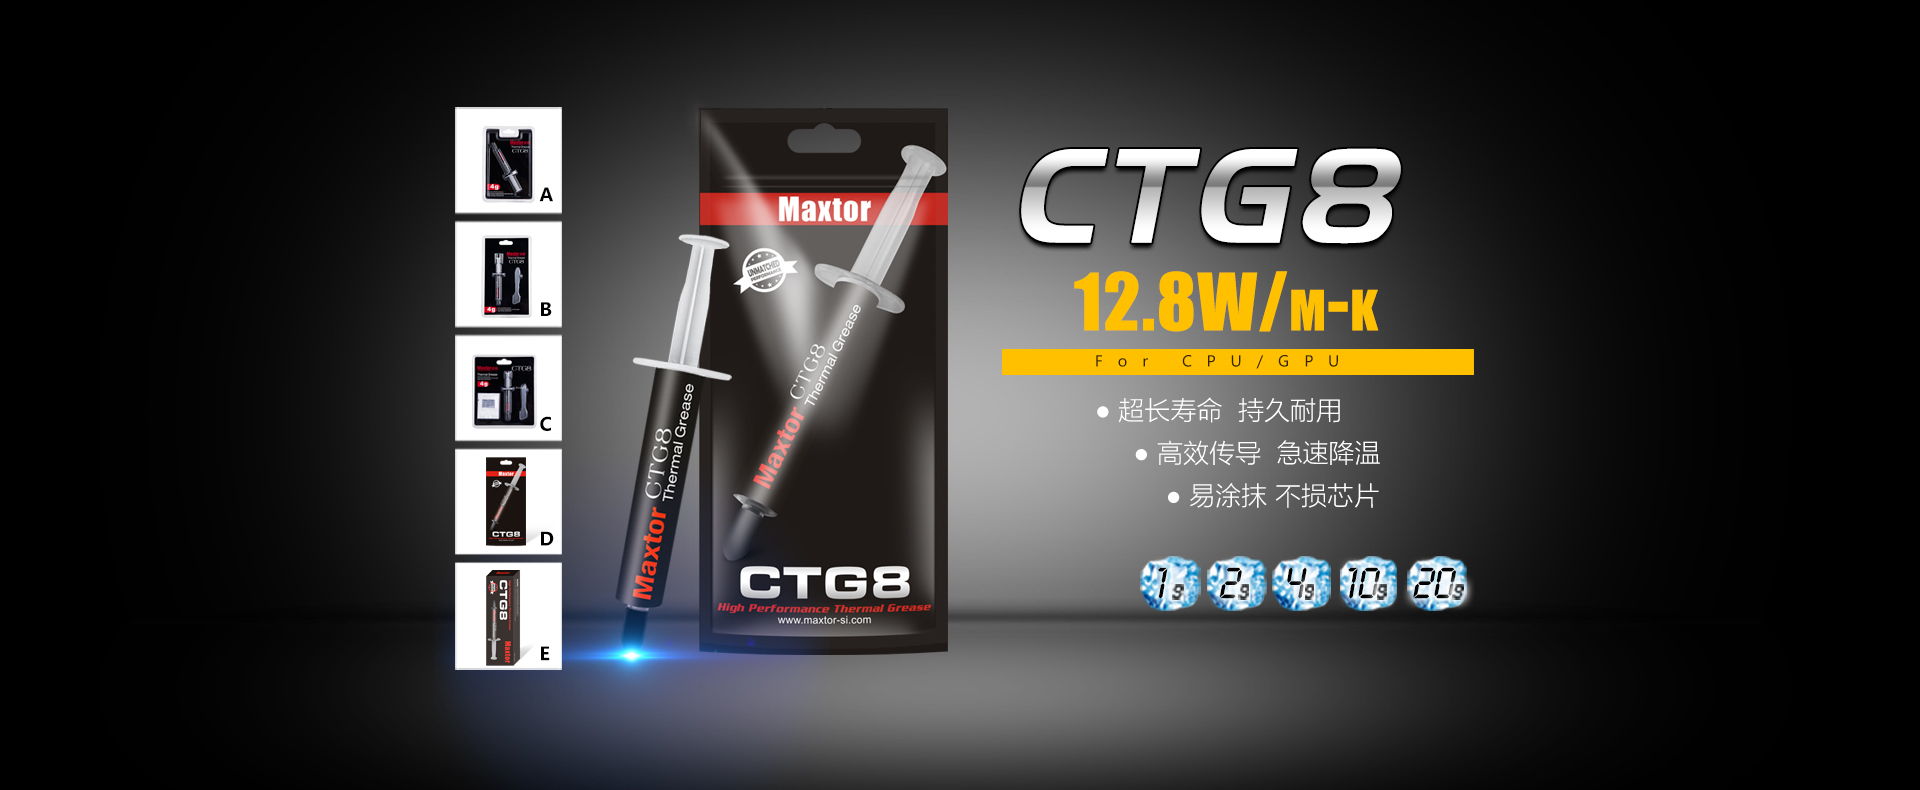 CTG8导热硅脂